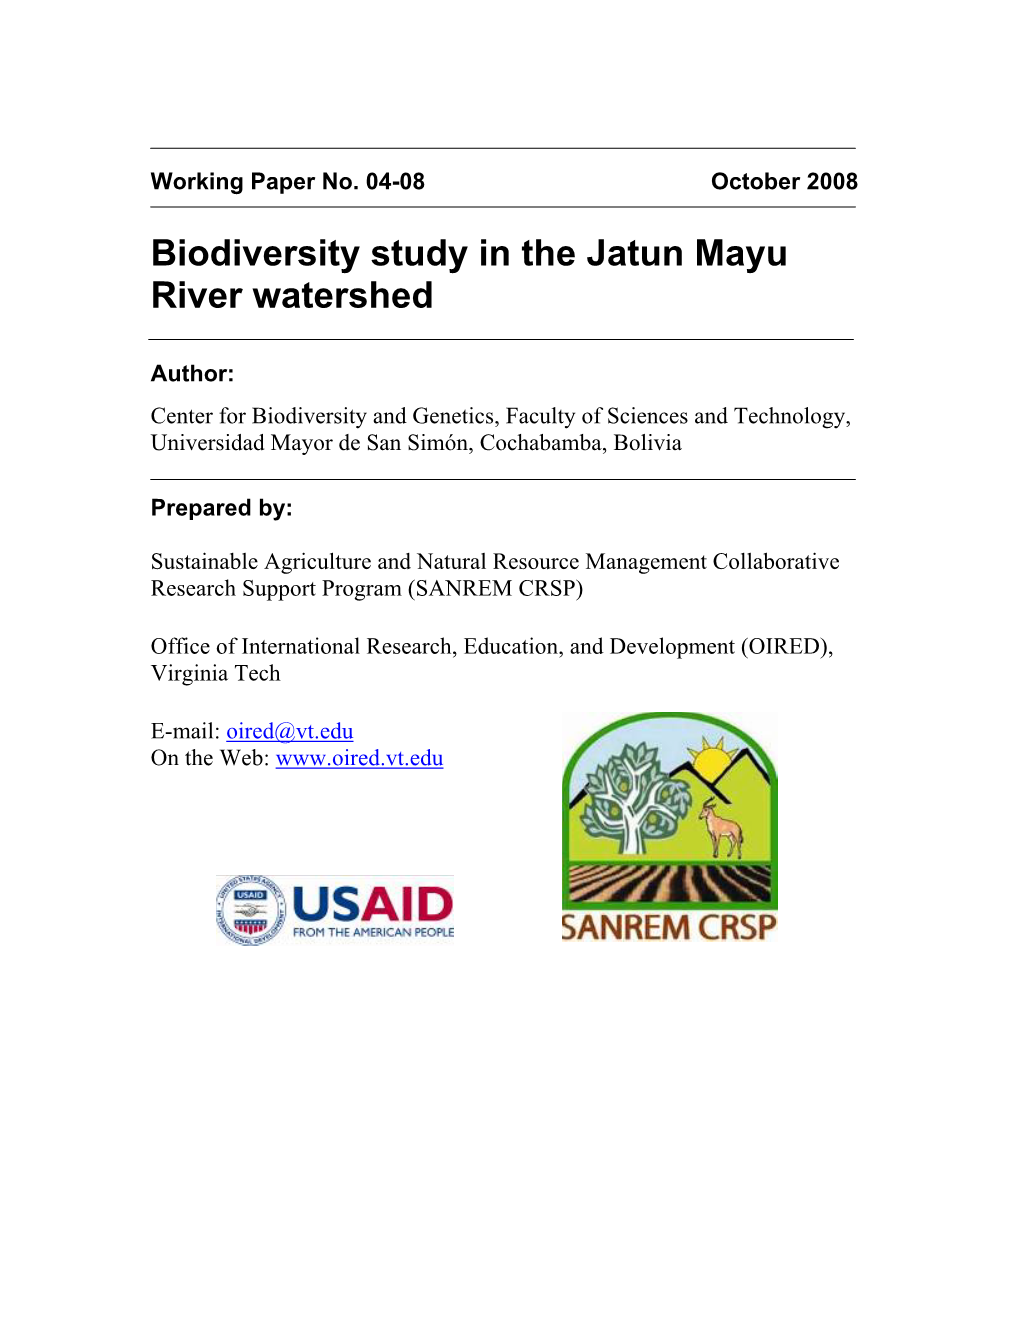 Biodiversity Study in the Jatun Mayu River Watershed